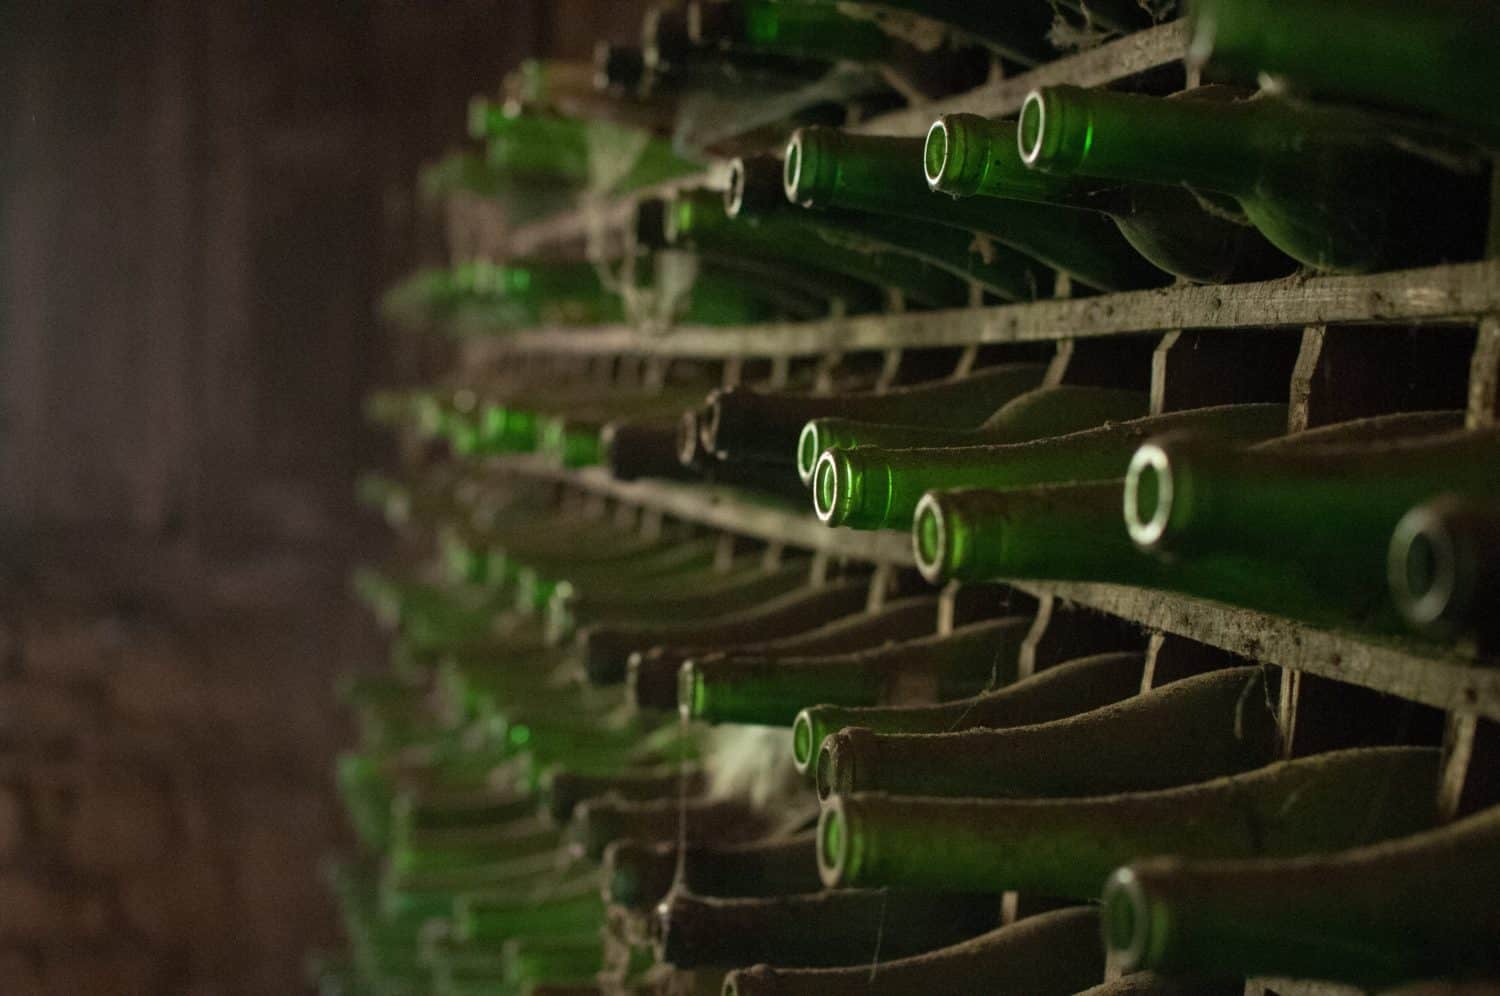 Empty green bottles on a rack.